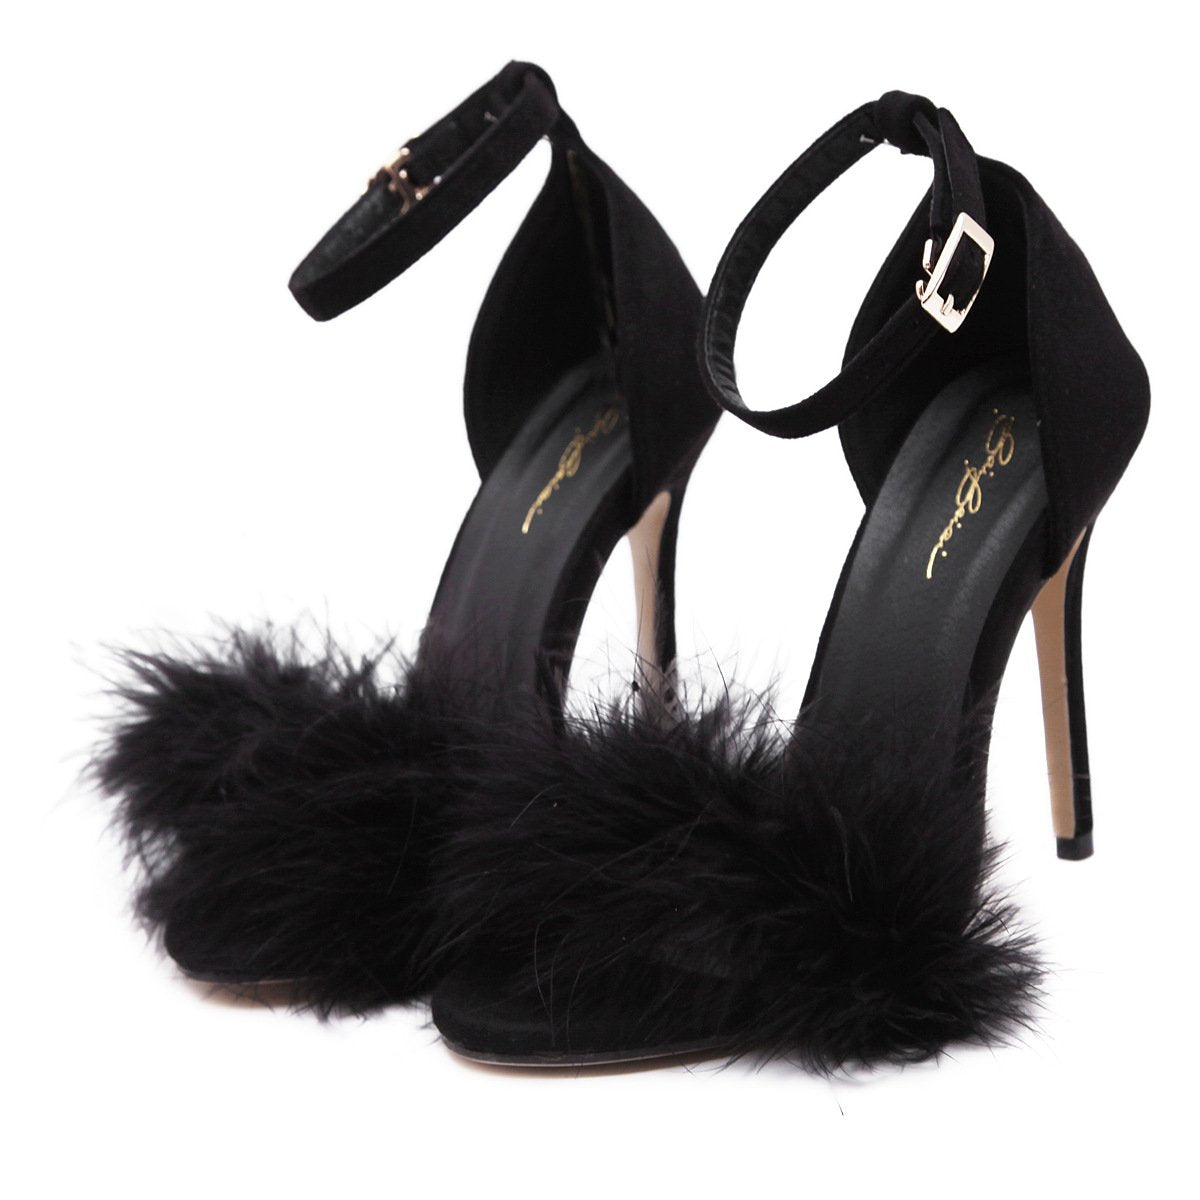 Stiletto PU Heel Peep-toe Fur Decorate Ankle Strap Sandals